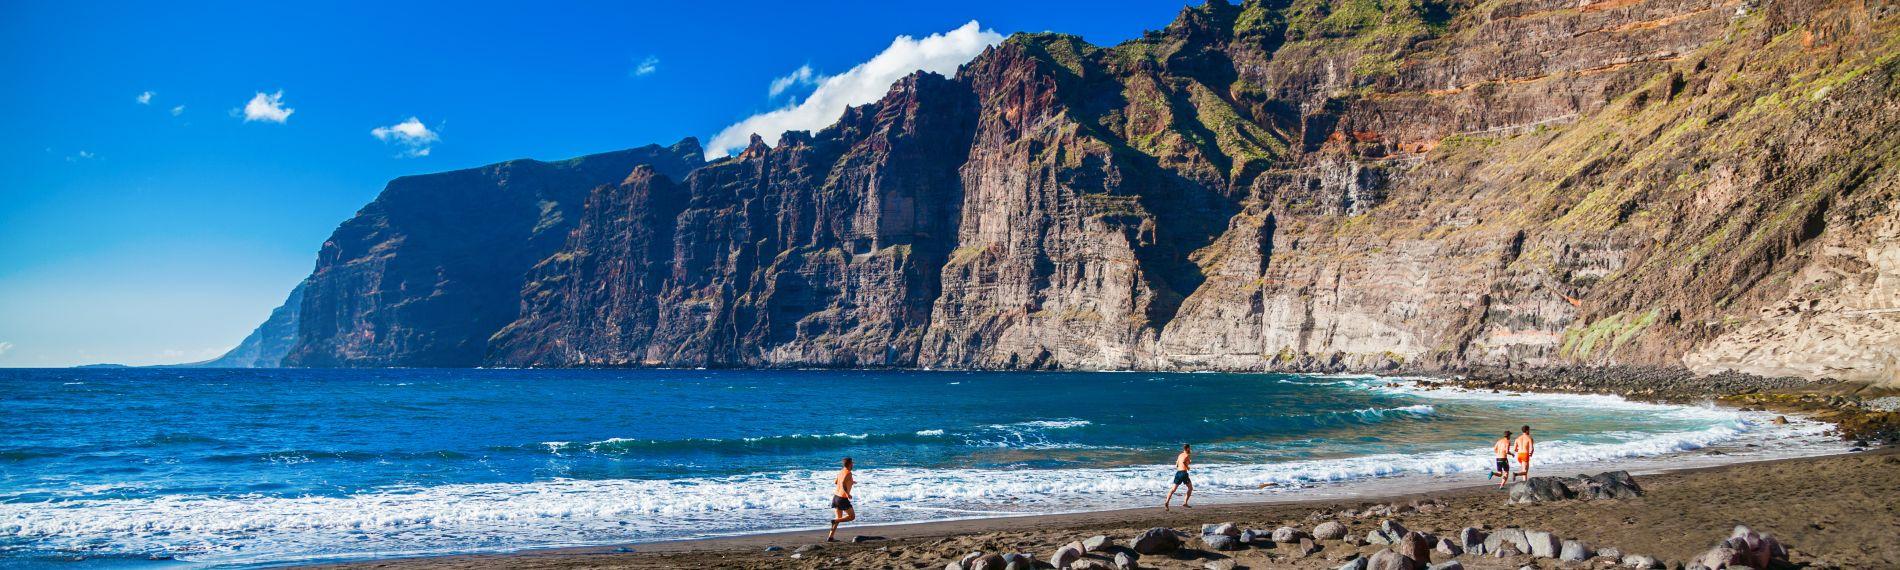 Four runners following the waterline on Playa de los Guios beach, where Tenerife's famous Los Gigantes cliffs rise up beside the black sands and blue sea near Puerto de Santiago